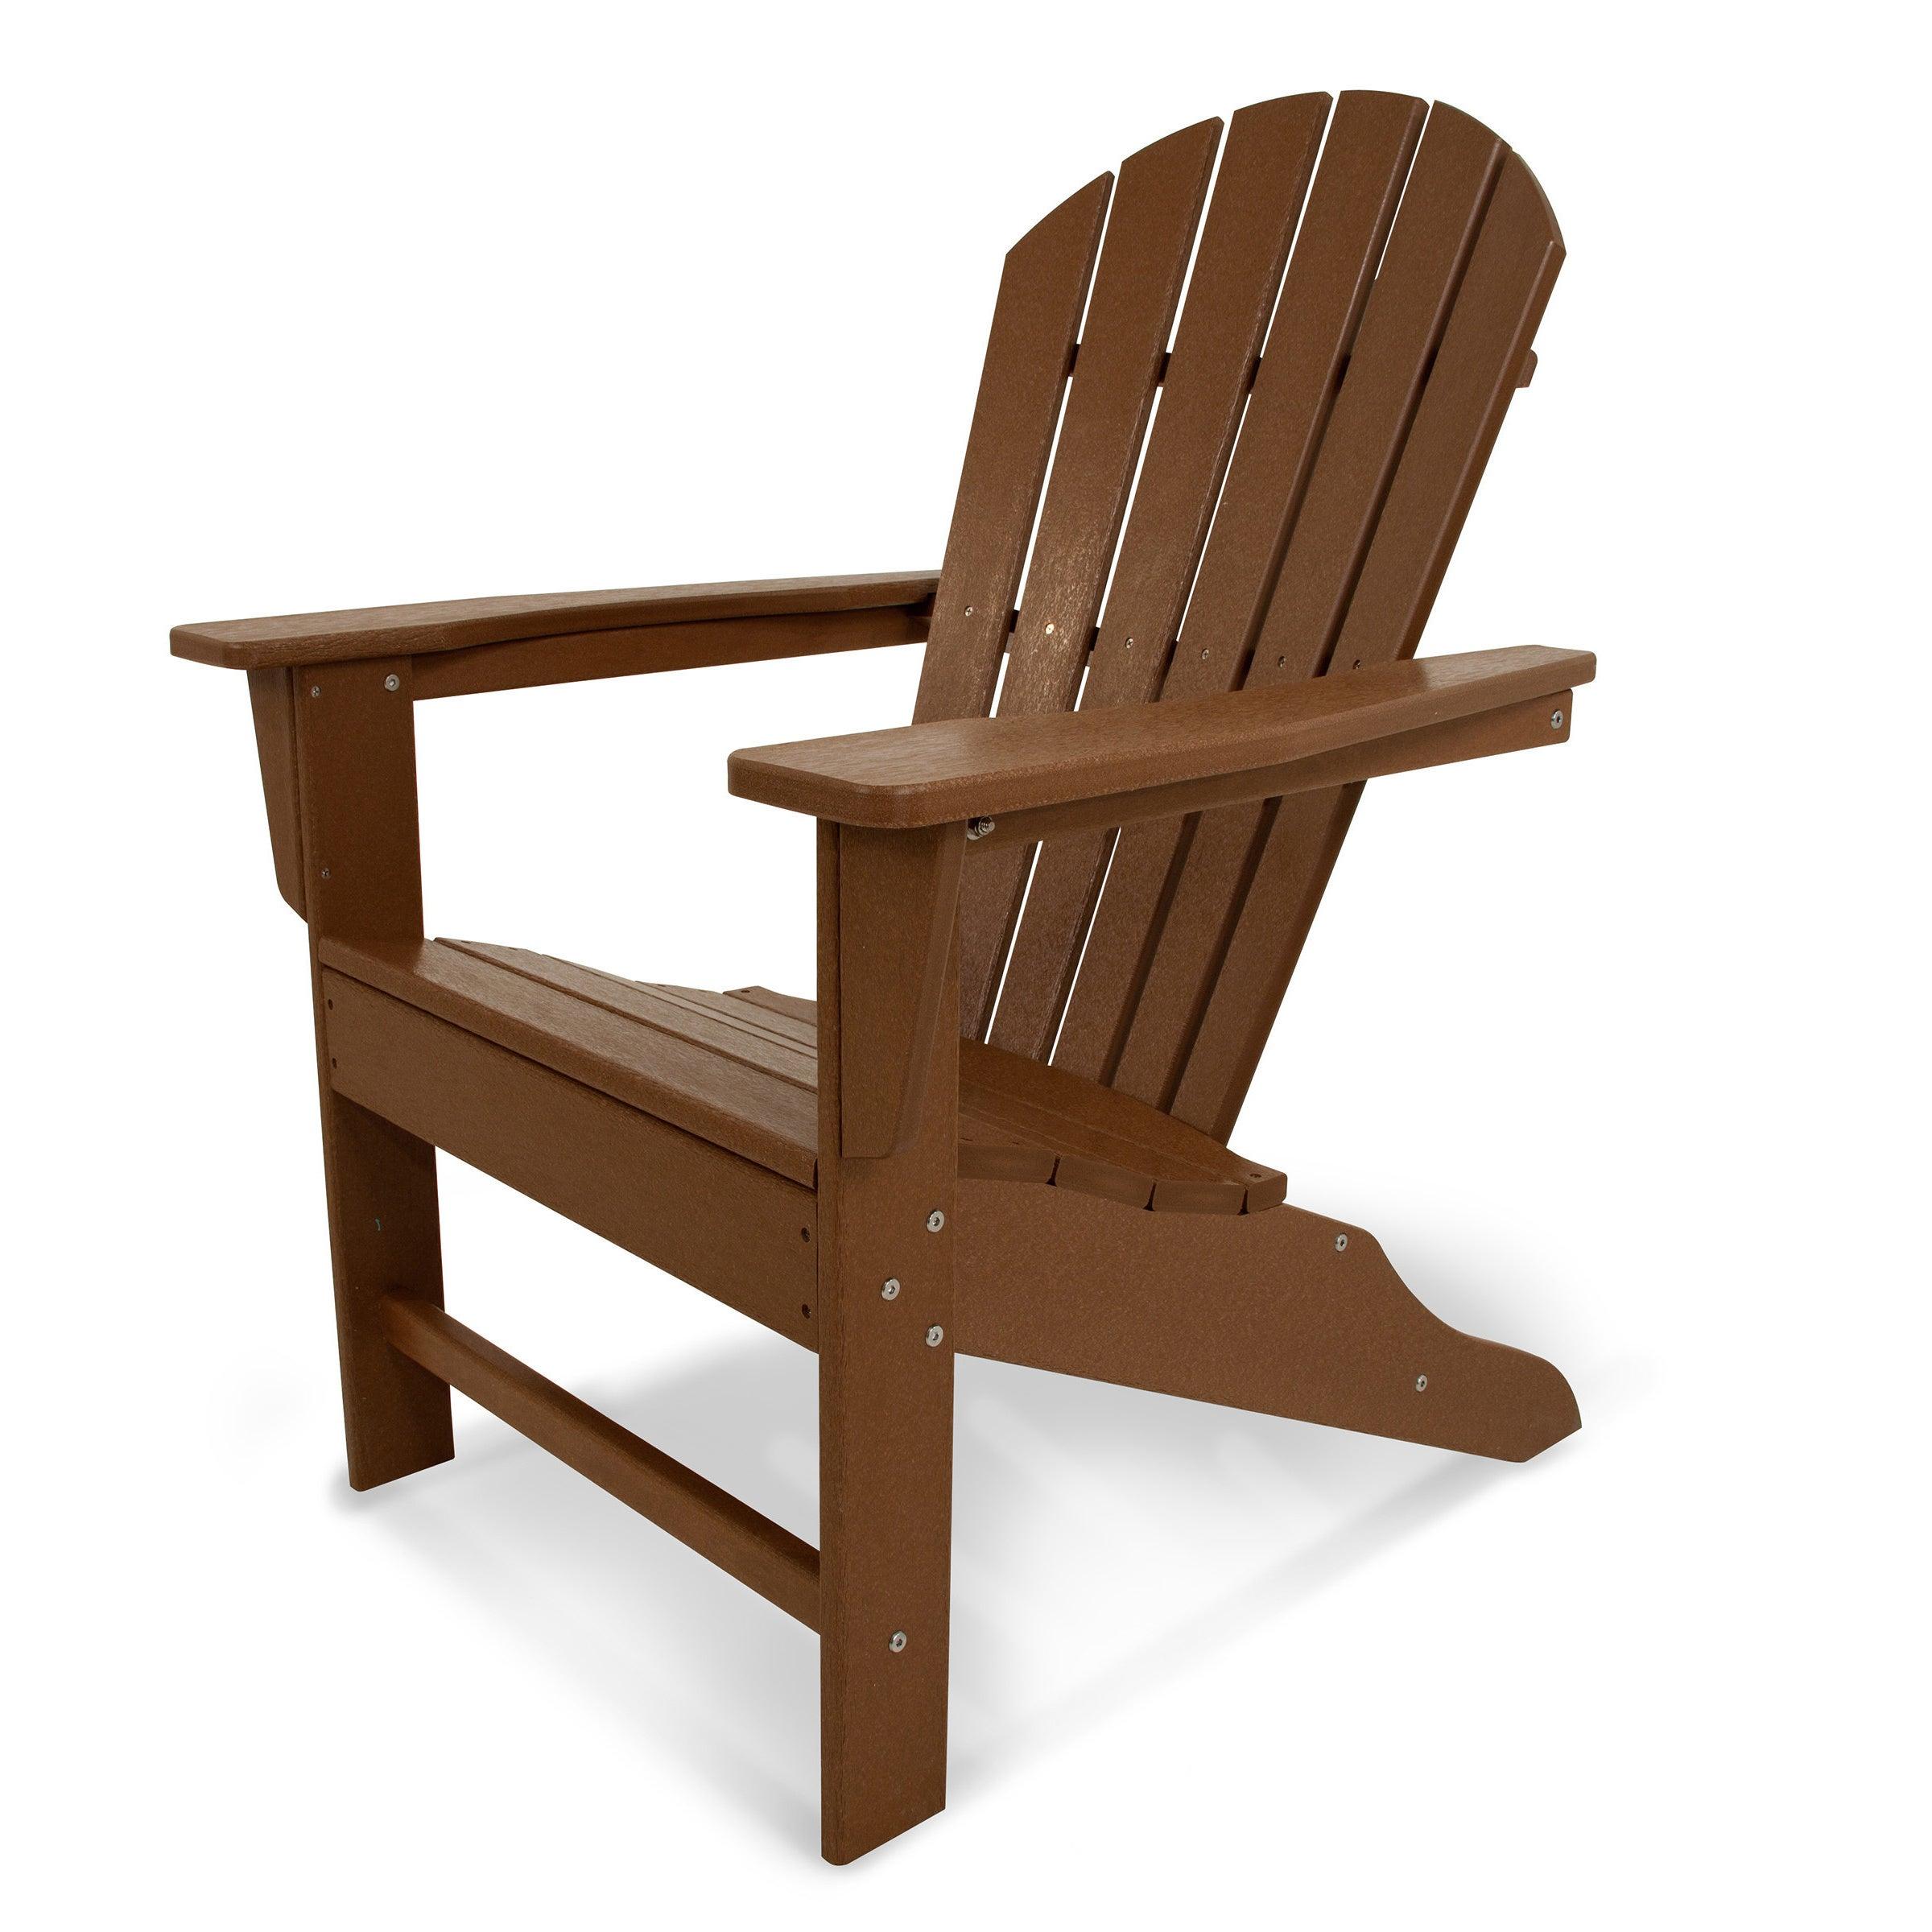 POLYWOOD South Beach Outdoor Adirondack Chair